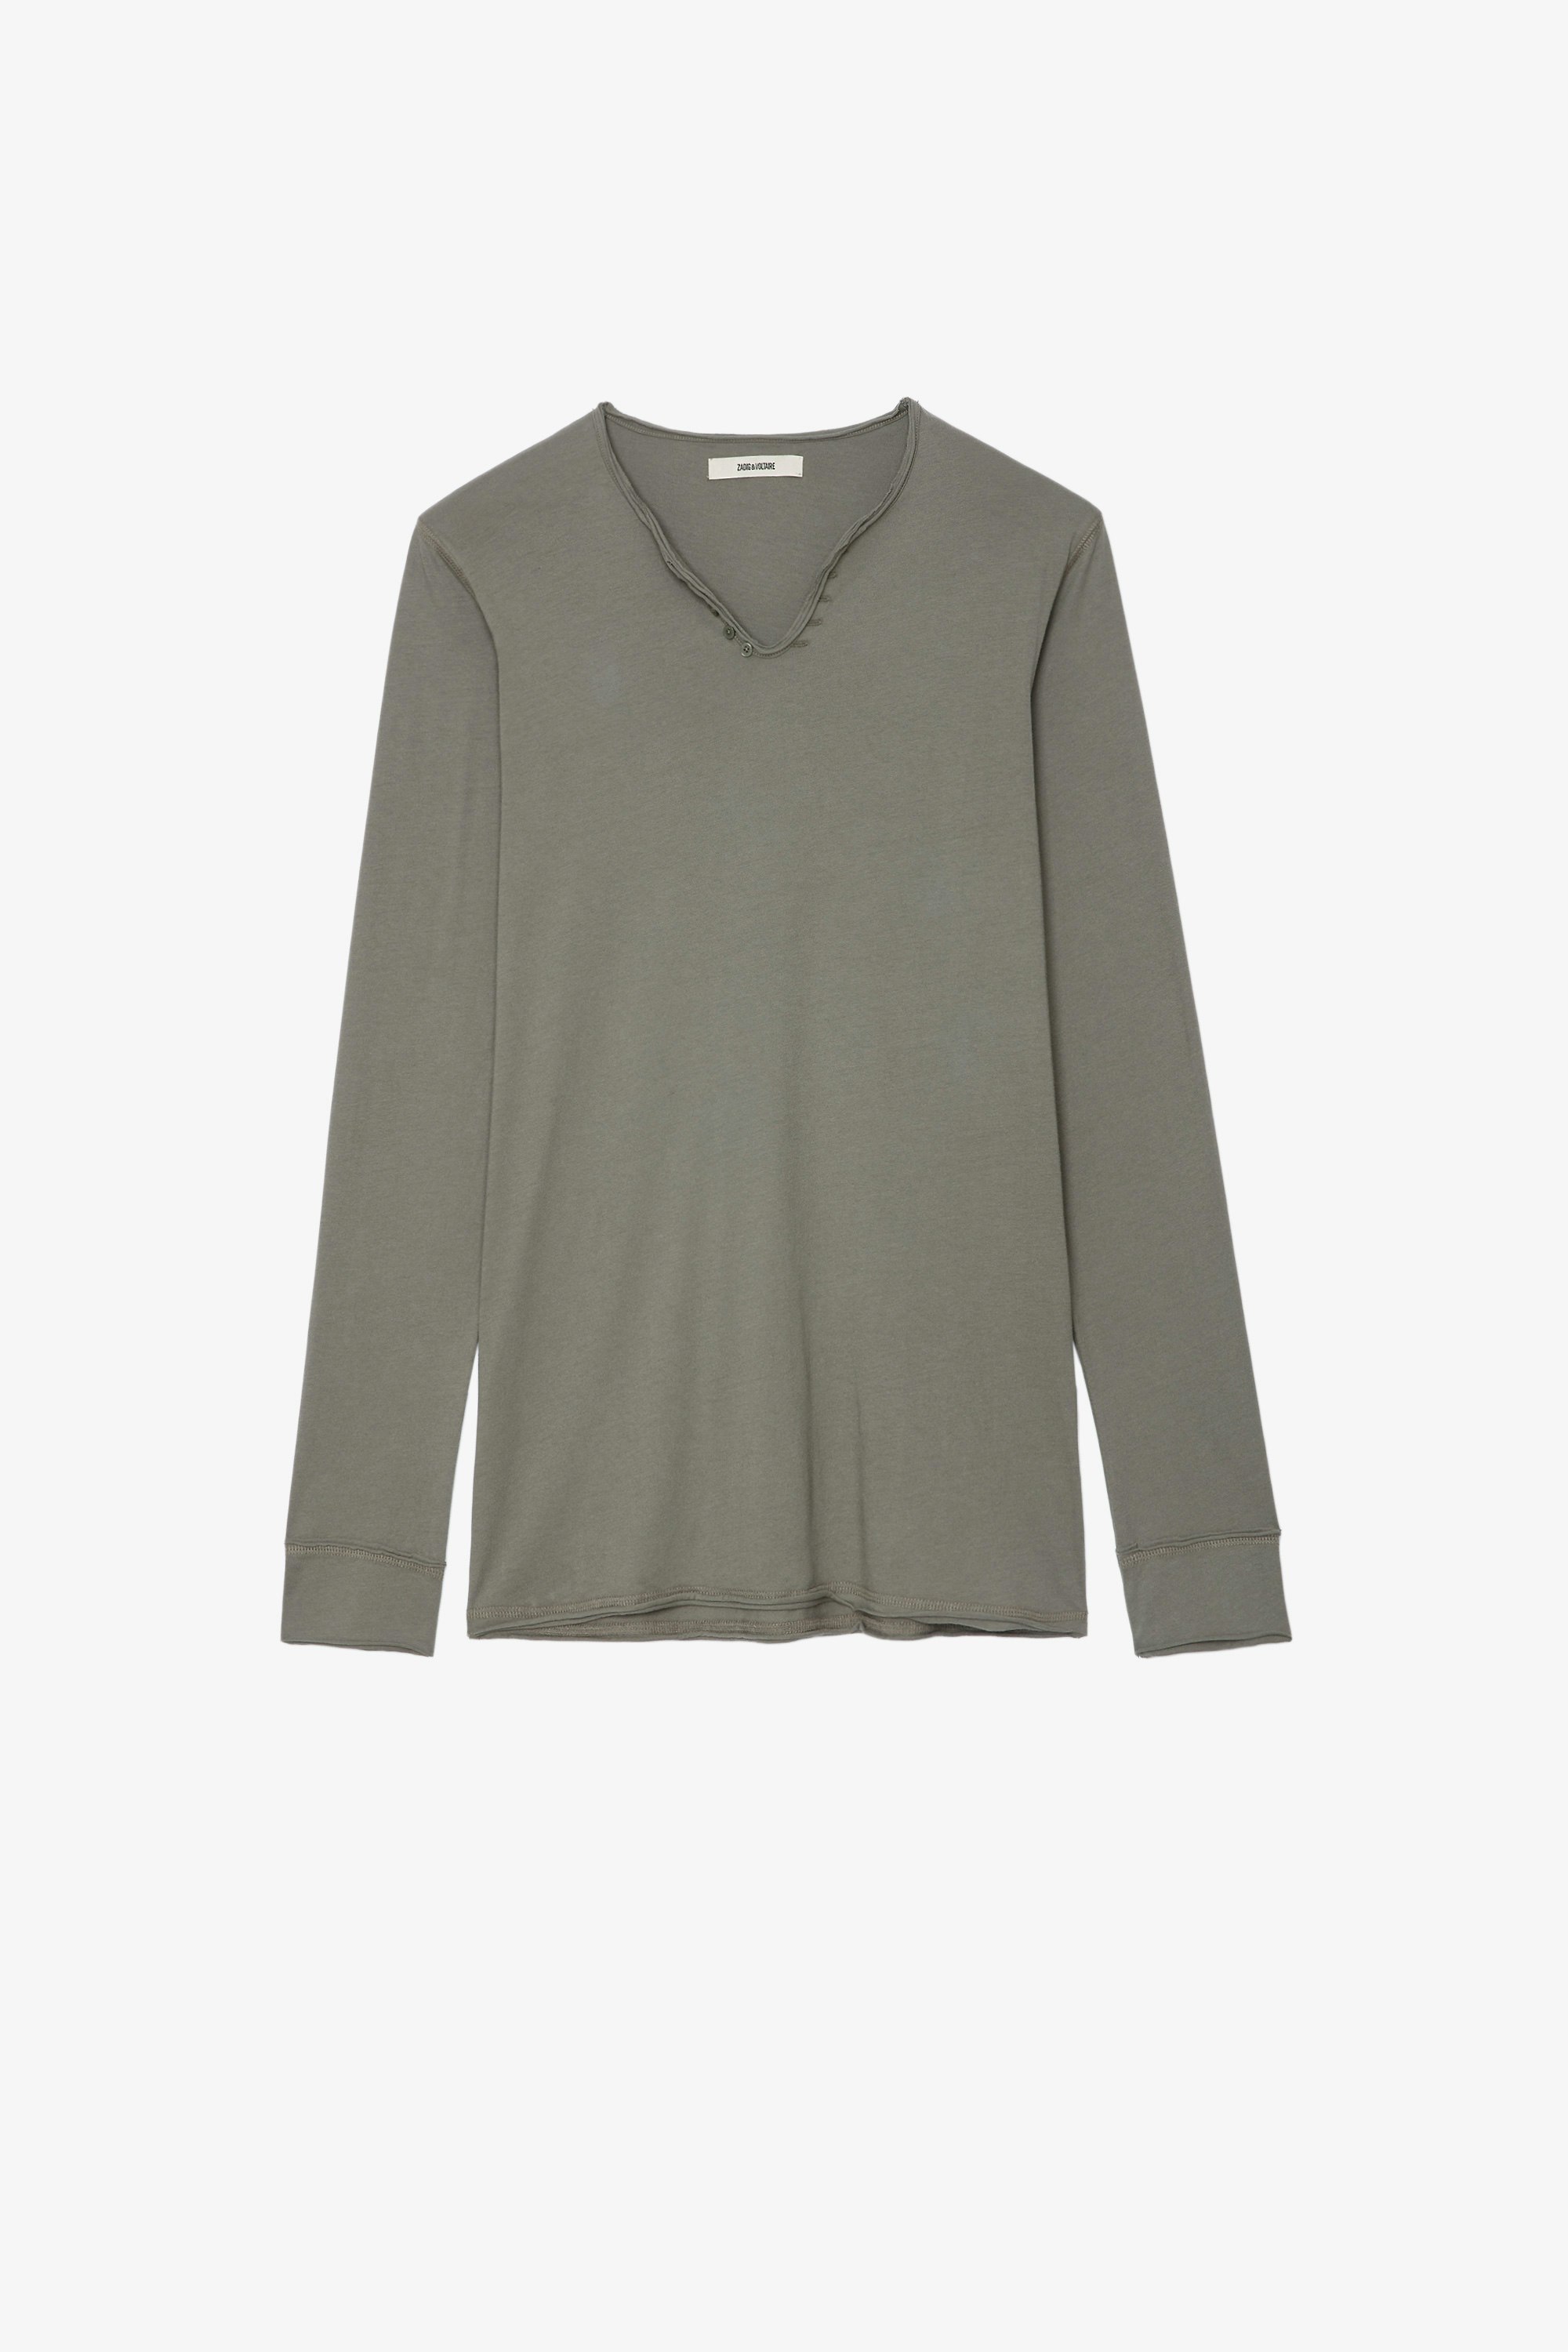 Monastir Ｔシャツ グリーン コットン チュニジアン カラー 長袖Tシャツ メンズ